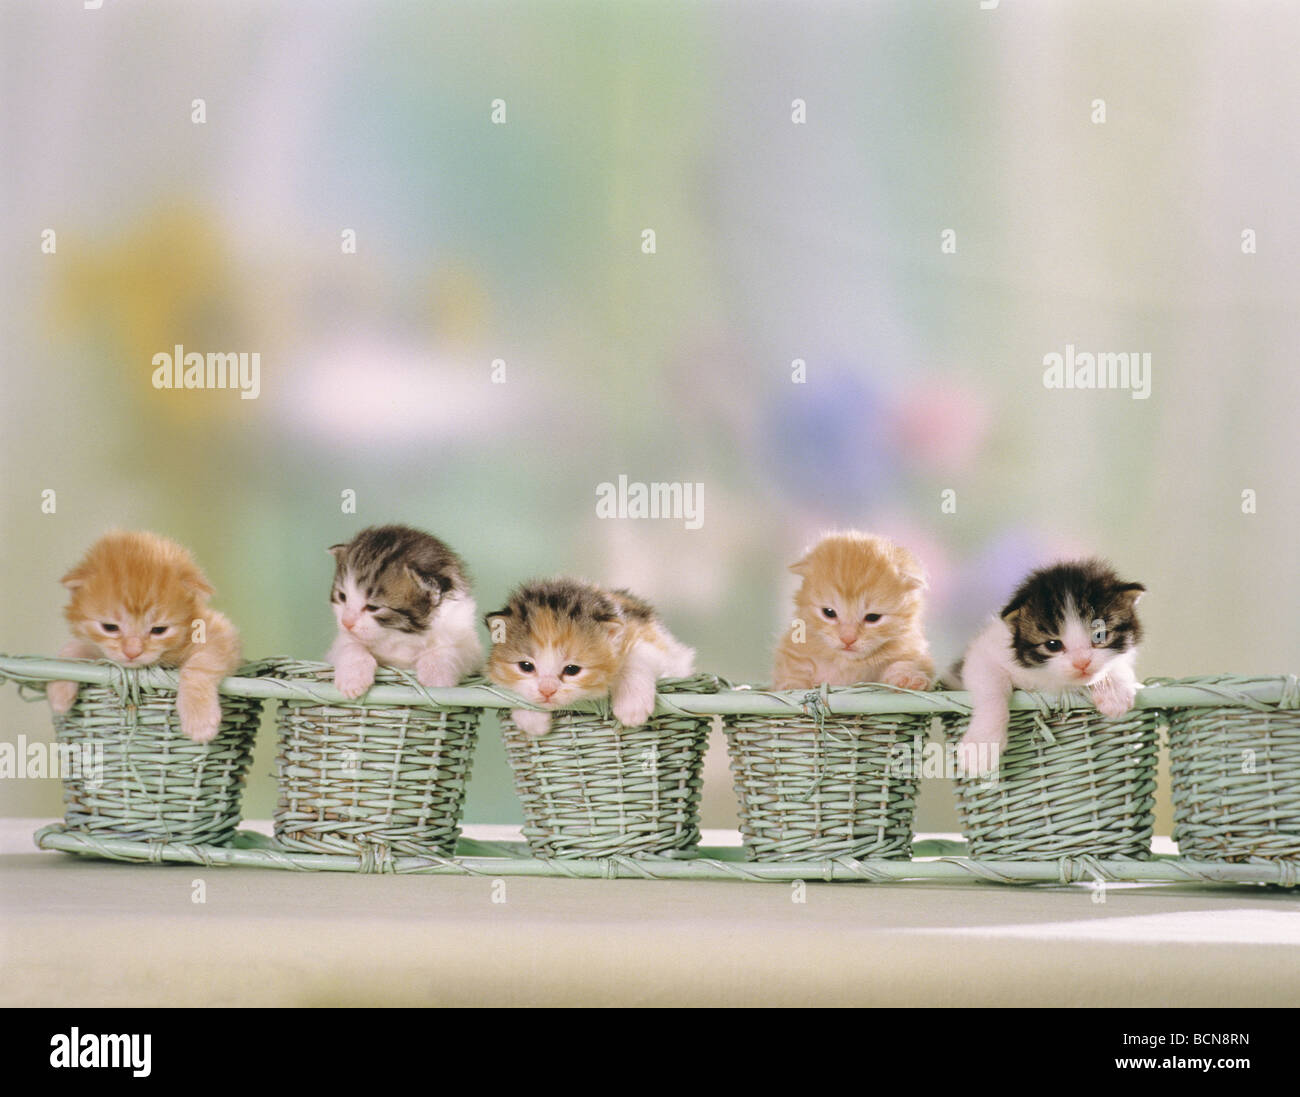 five cats kitten in basket Stock Photo